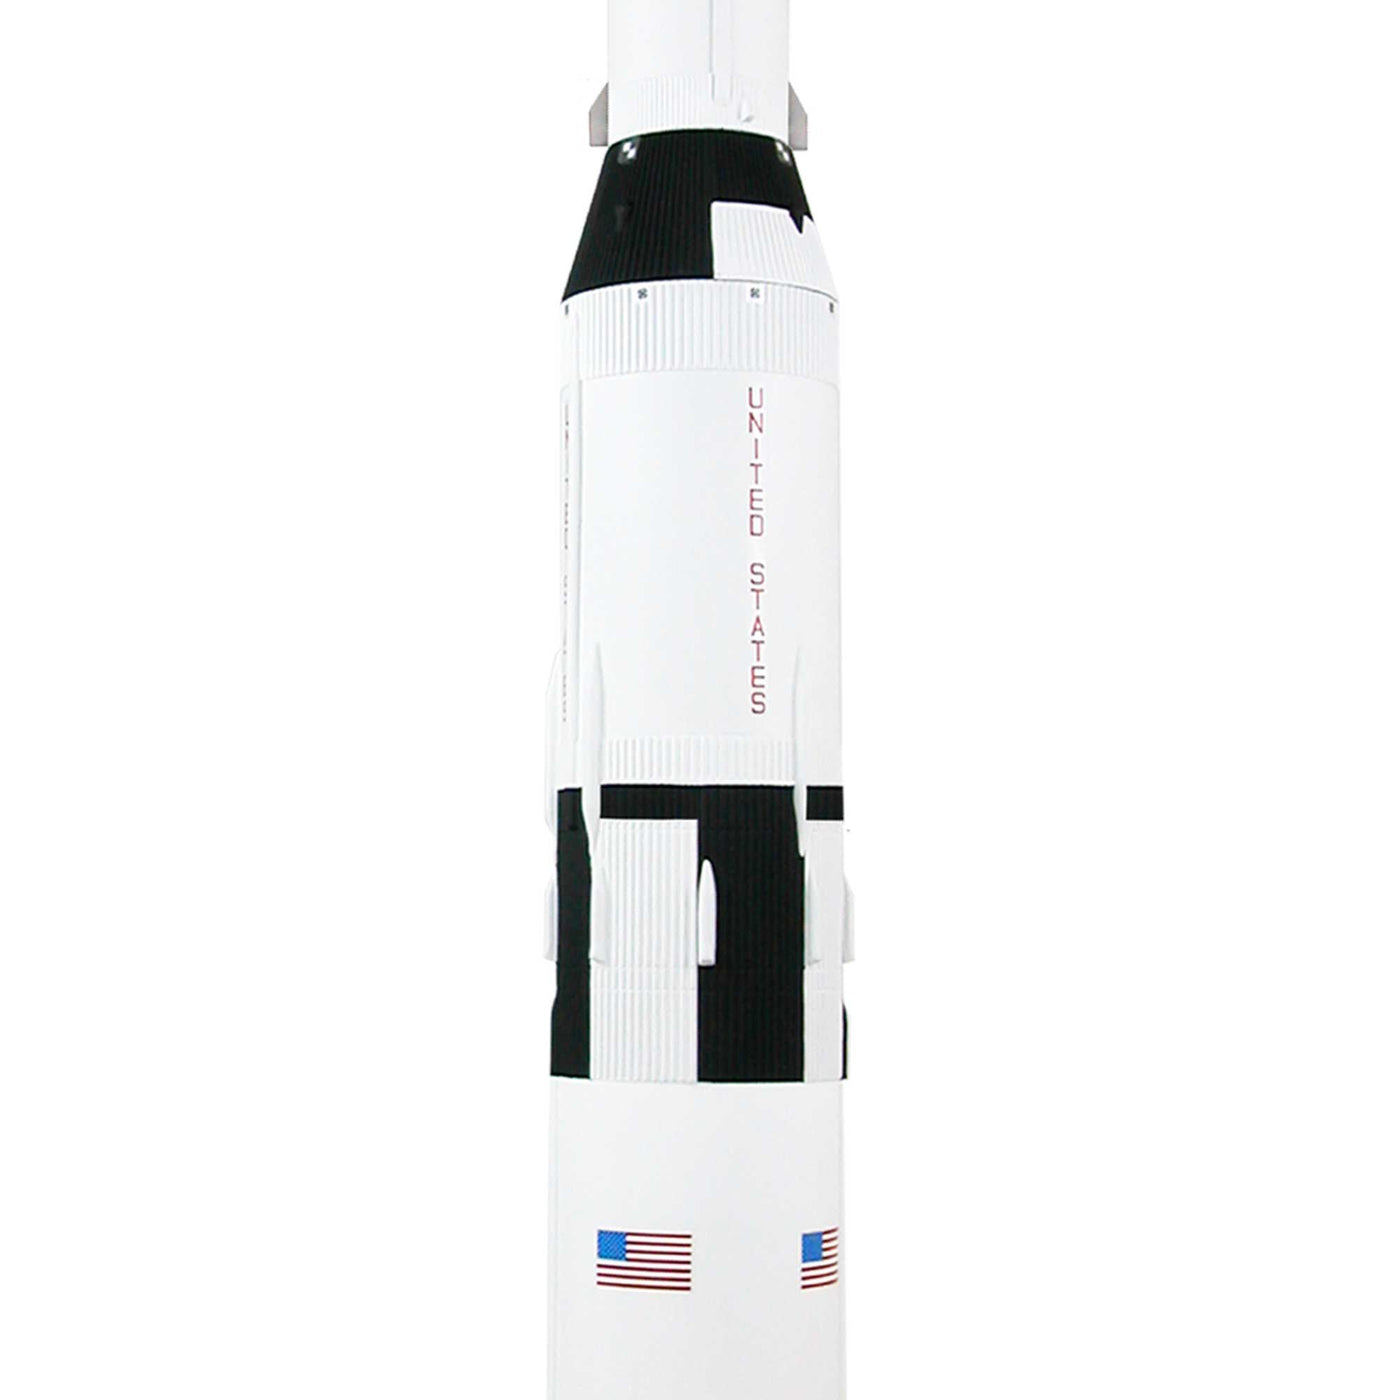 ESTES 2160 Saturn V 1:200 Scale ARF w/ stand